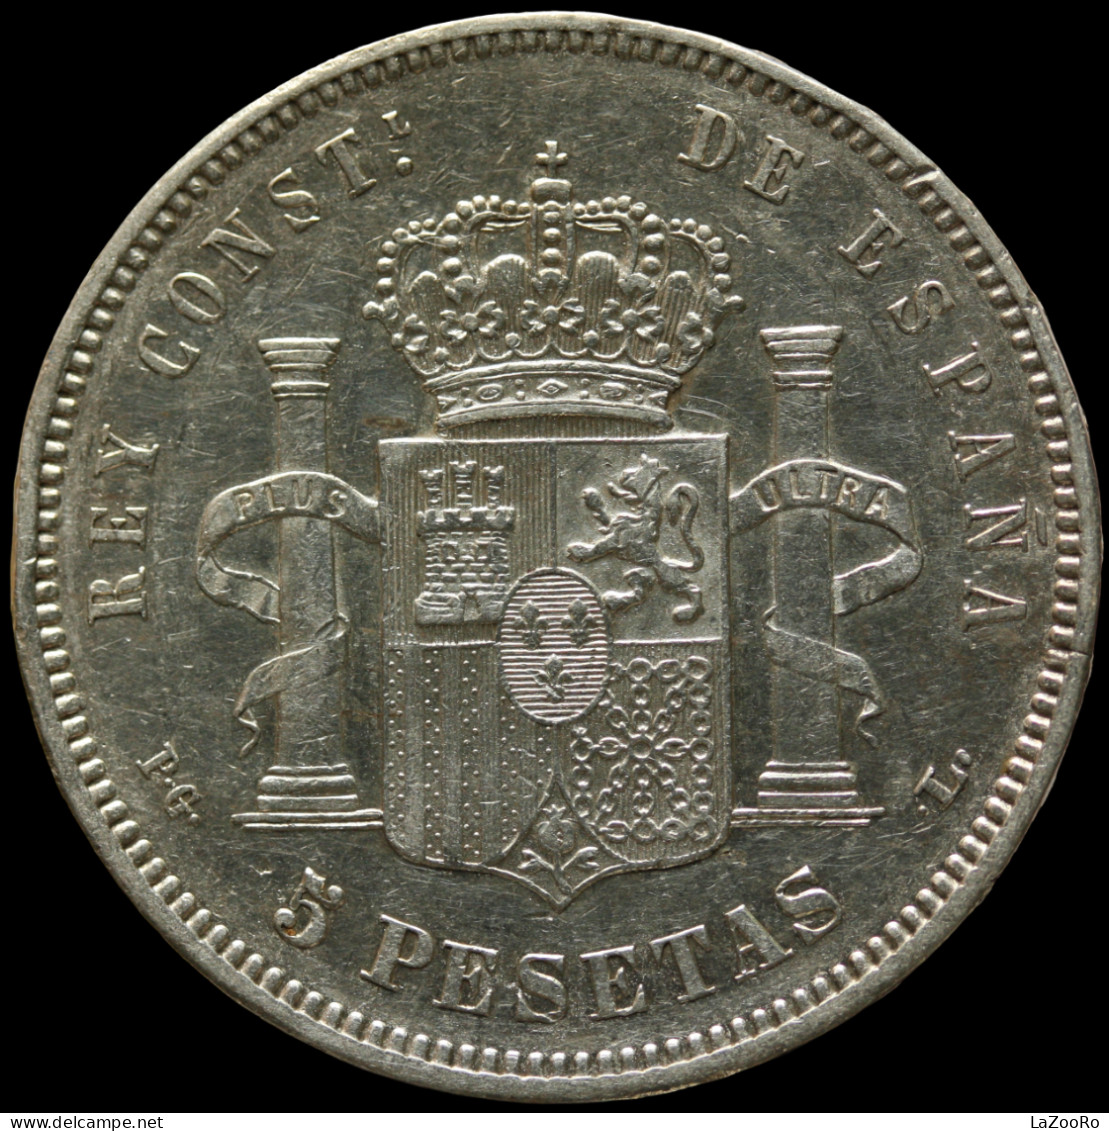 LaZooRo: Spain 5 Pesetas 1893 XF - Silver - First Minting